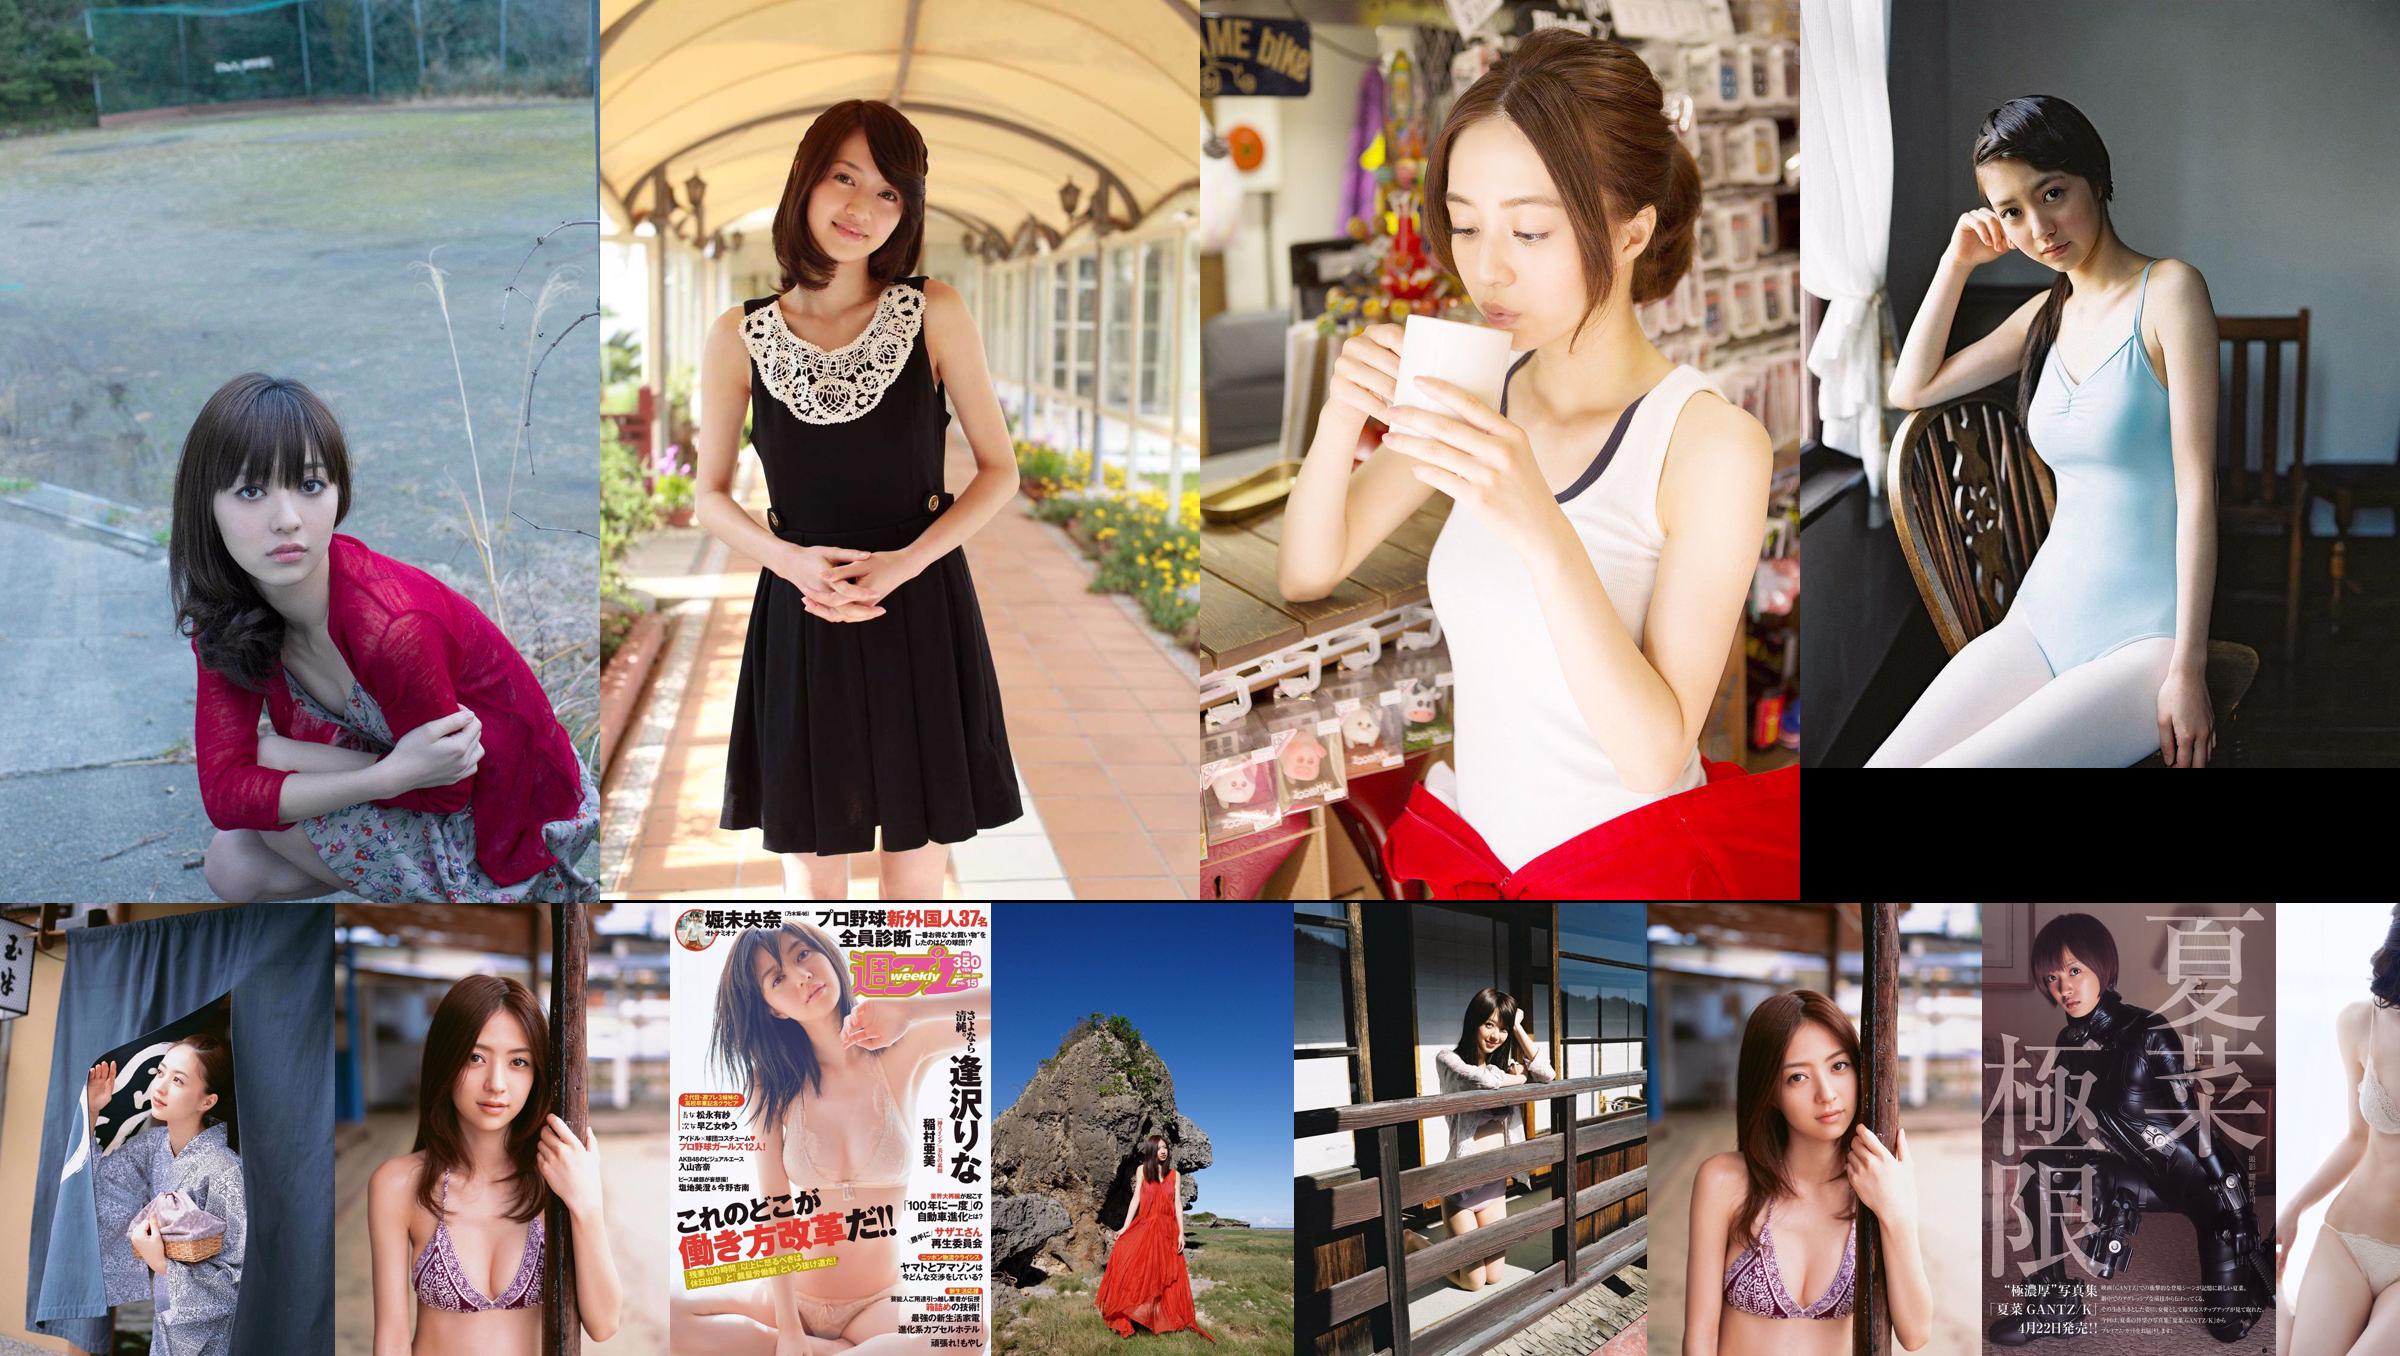 Rina Aizawa Rina Aizawa "Preciosa mañana" No.8353eb Página 3